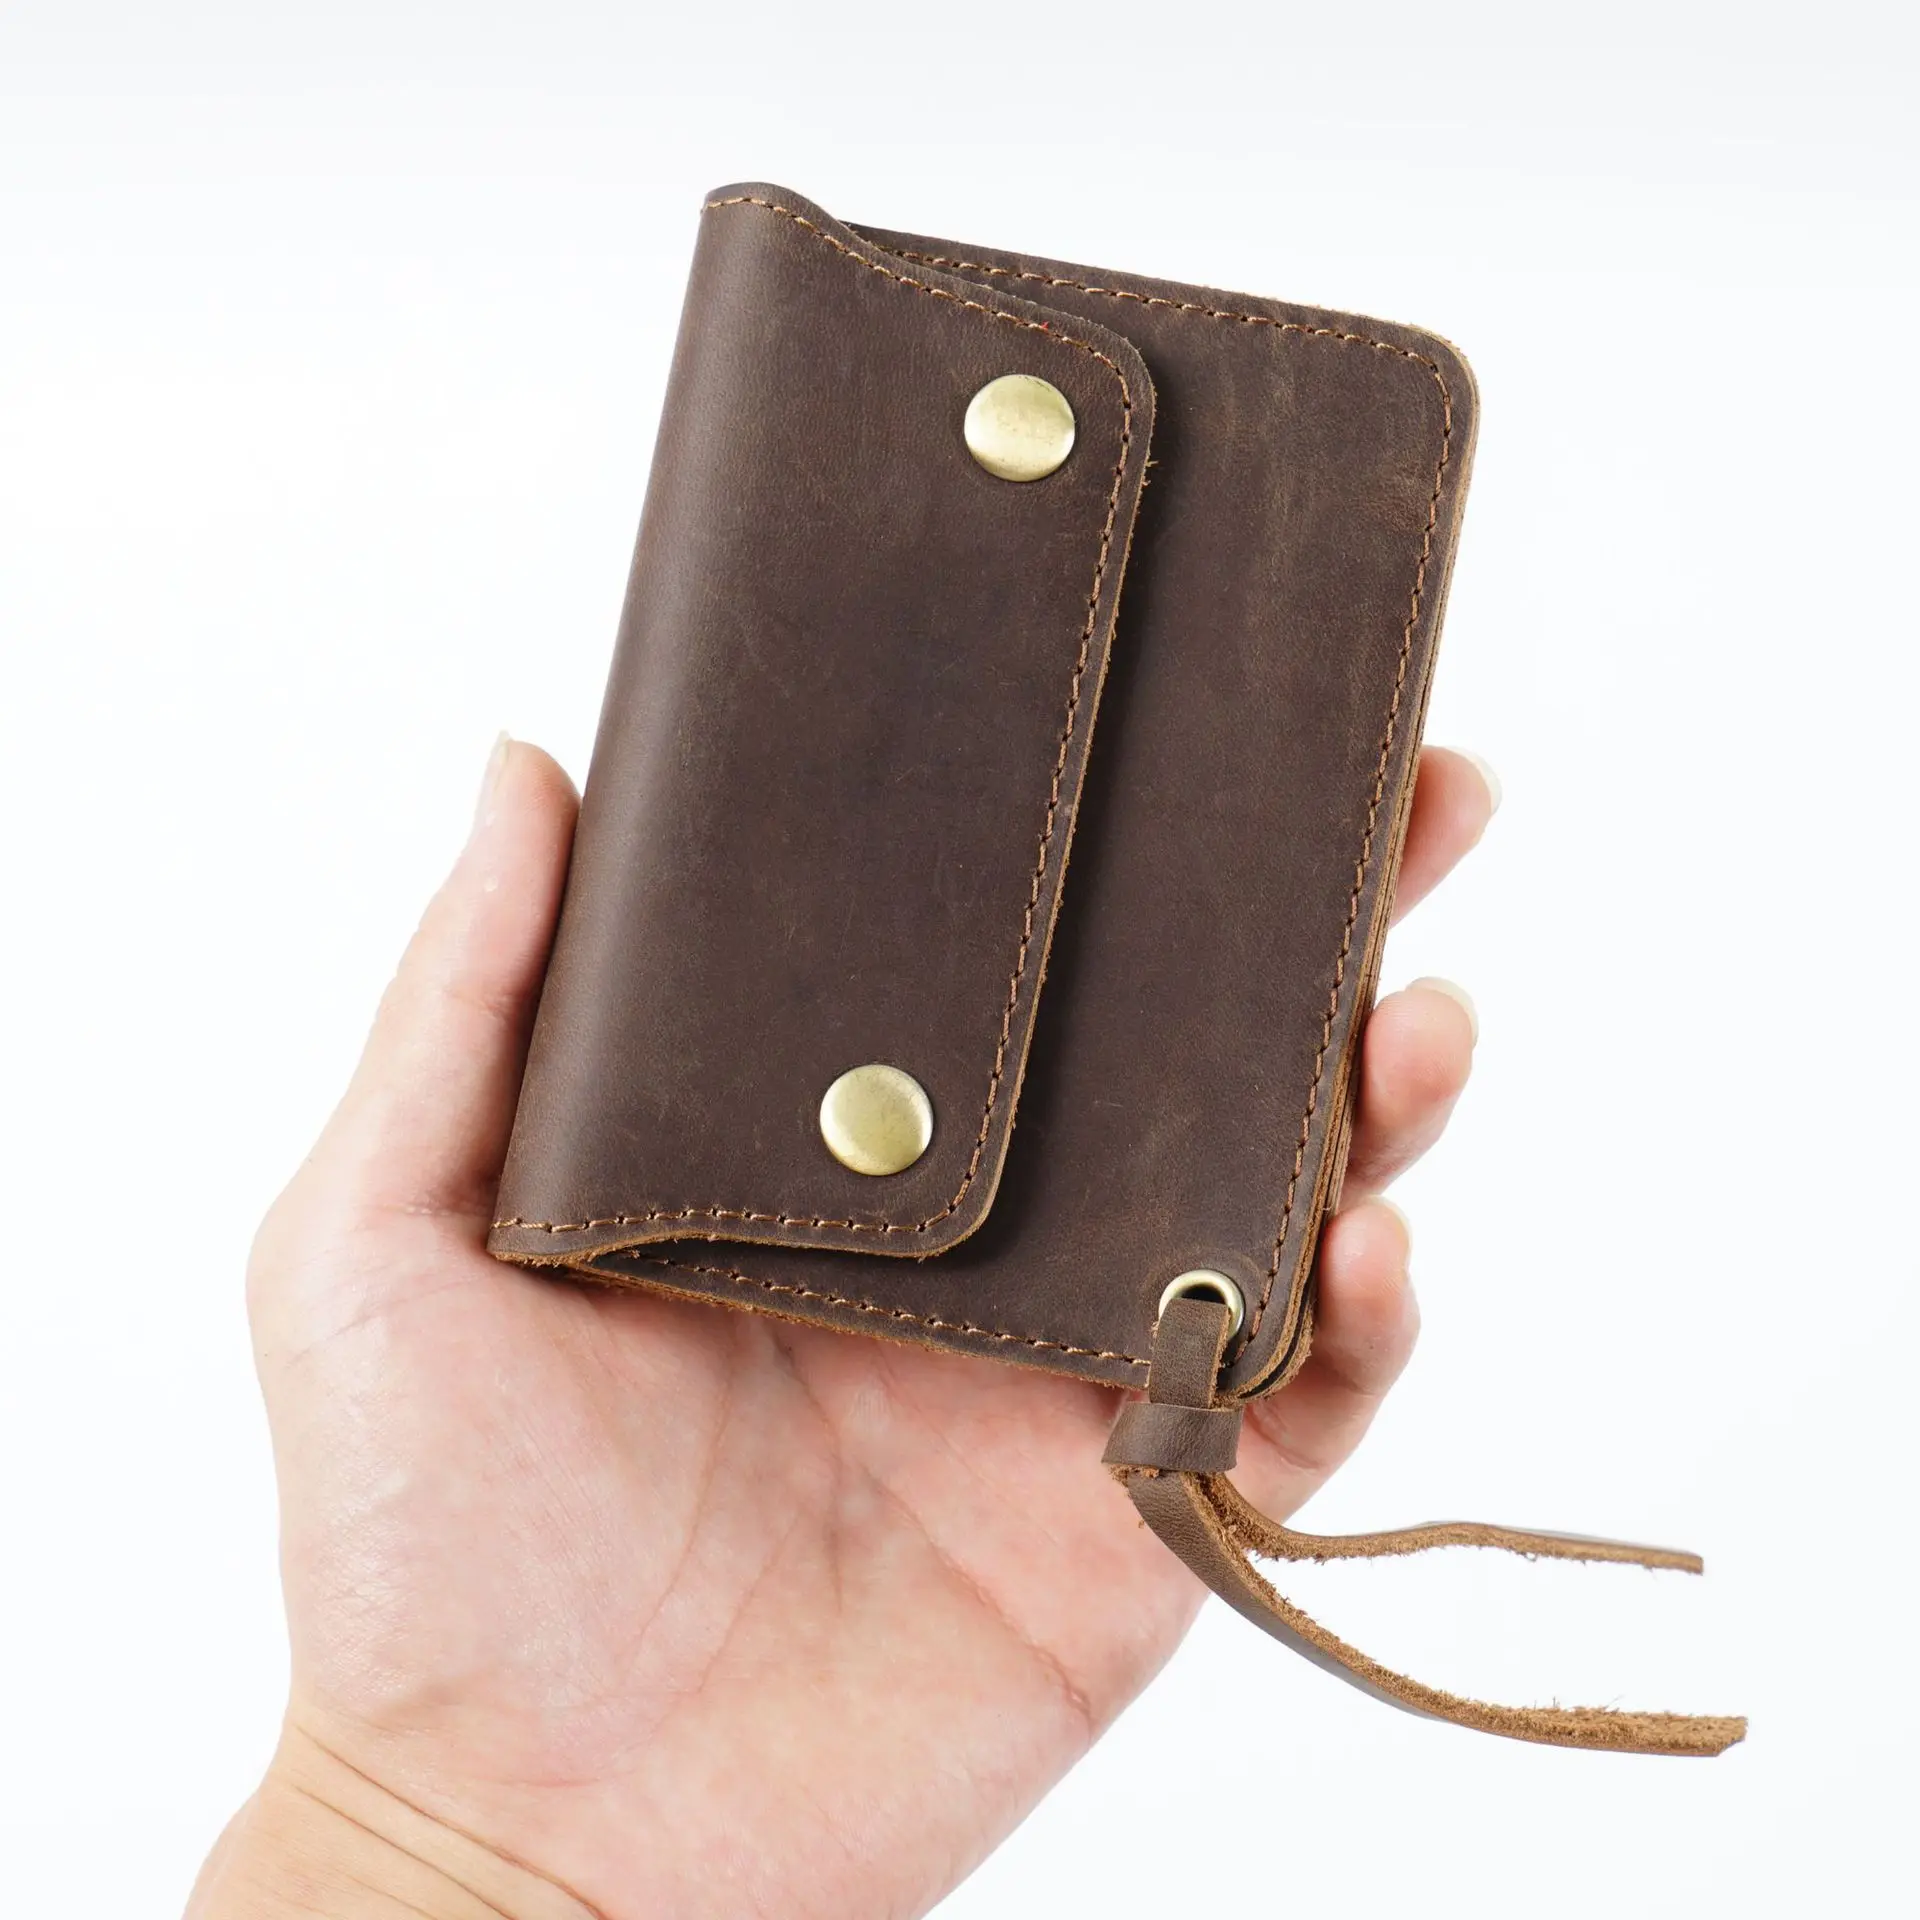 

SIKU genuine leathe purse handmade coin purses holders brand women wallet case